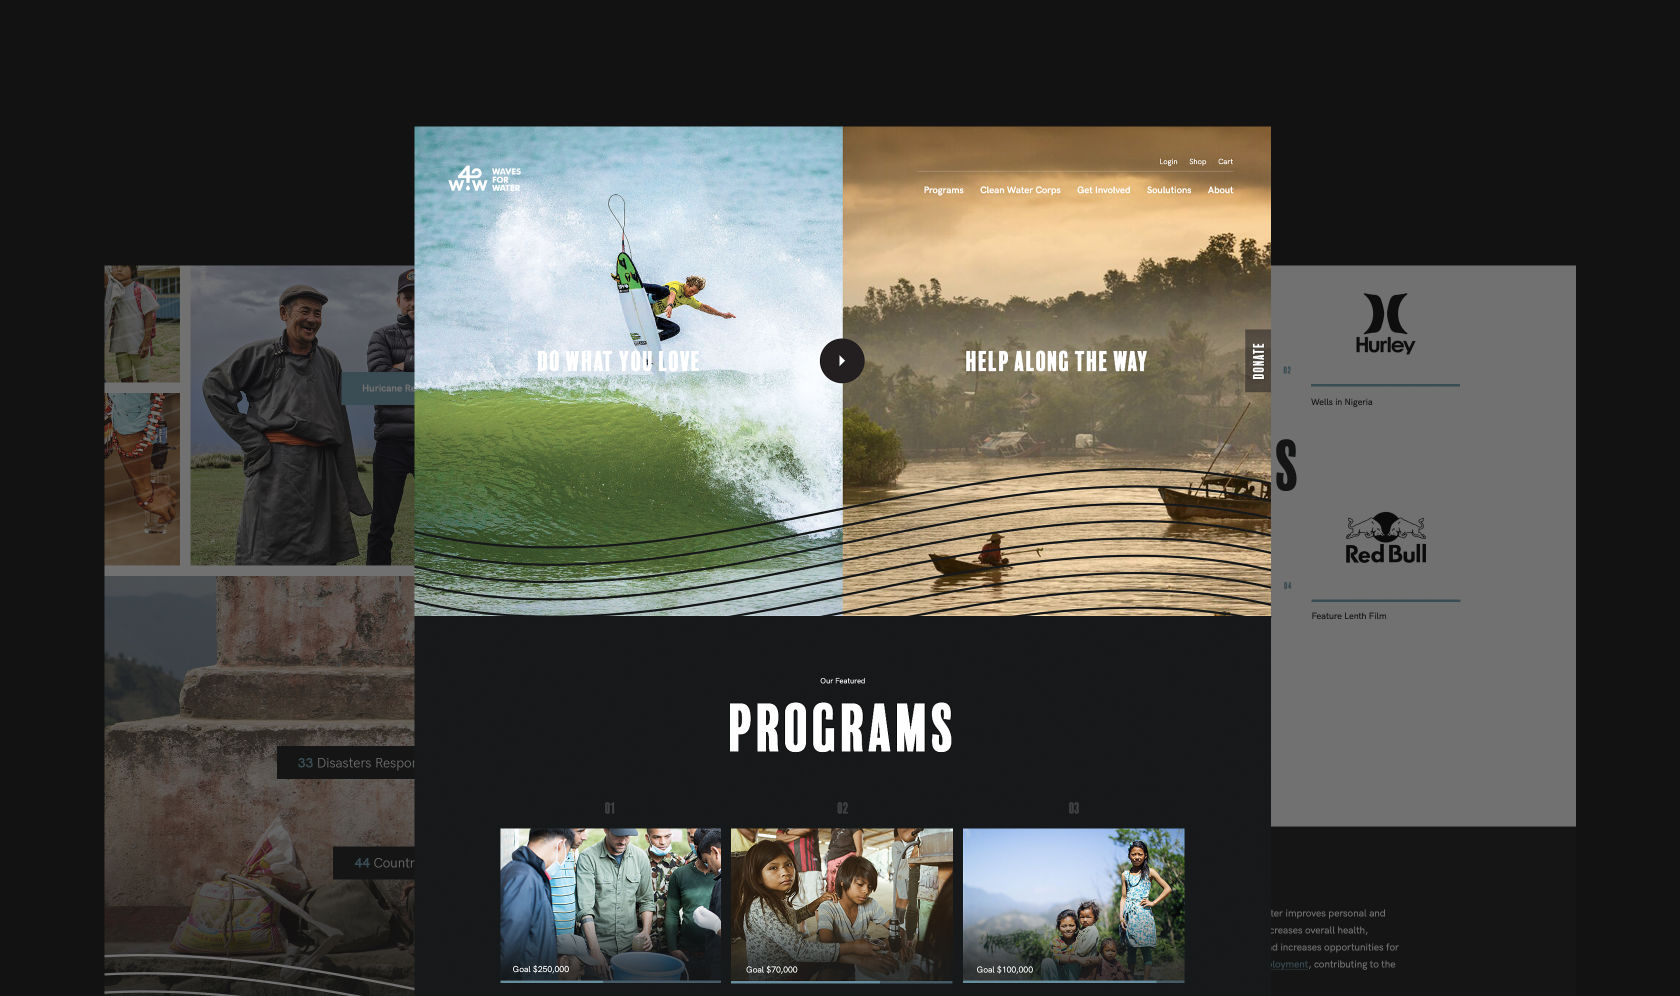 Waves for Water desktop website designs